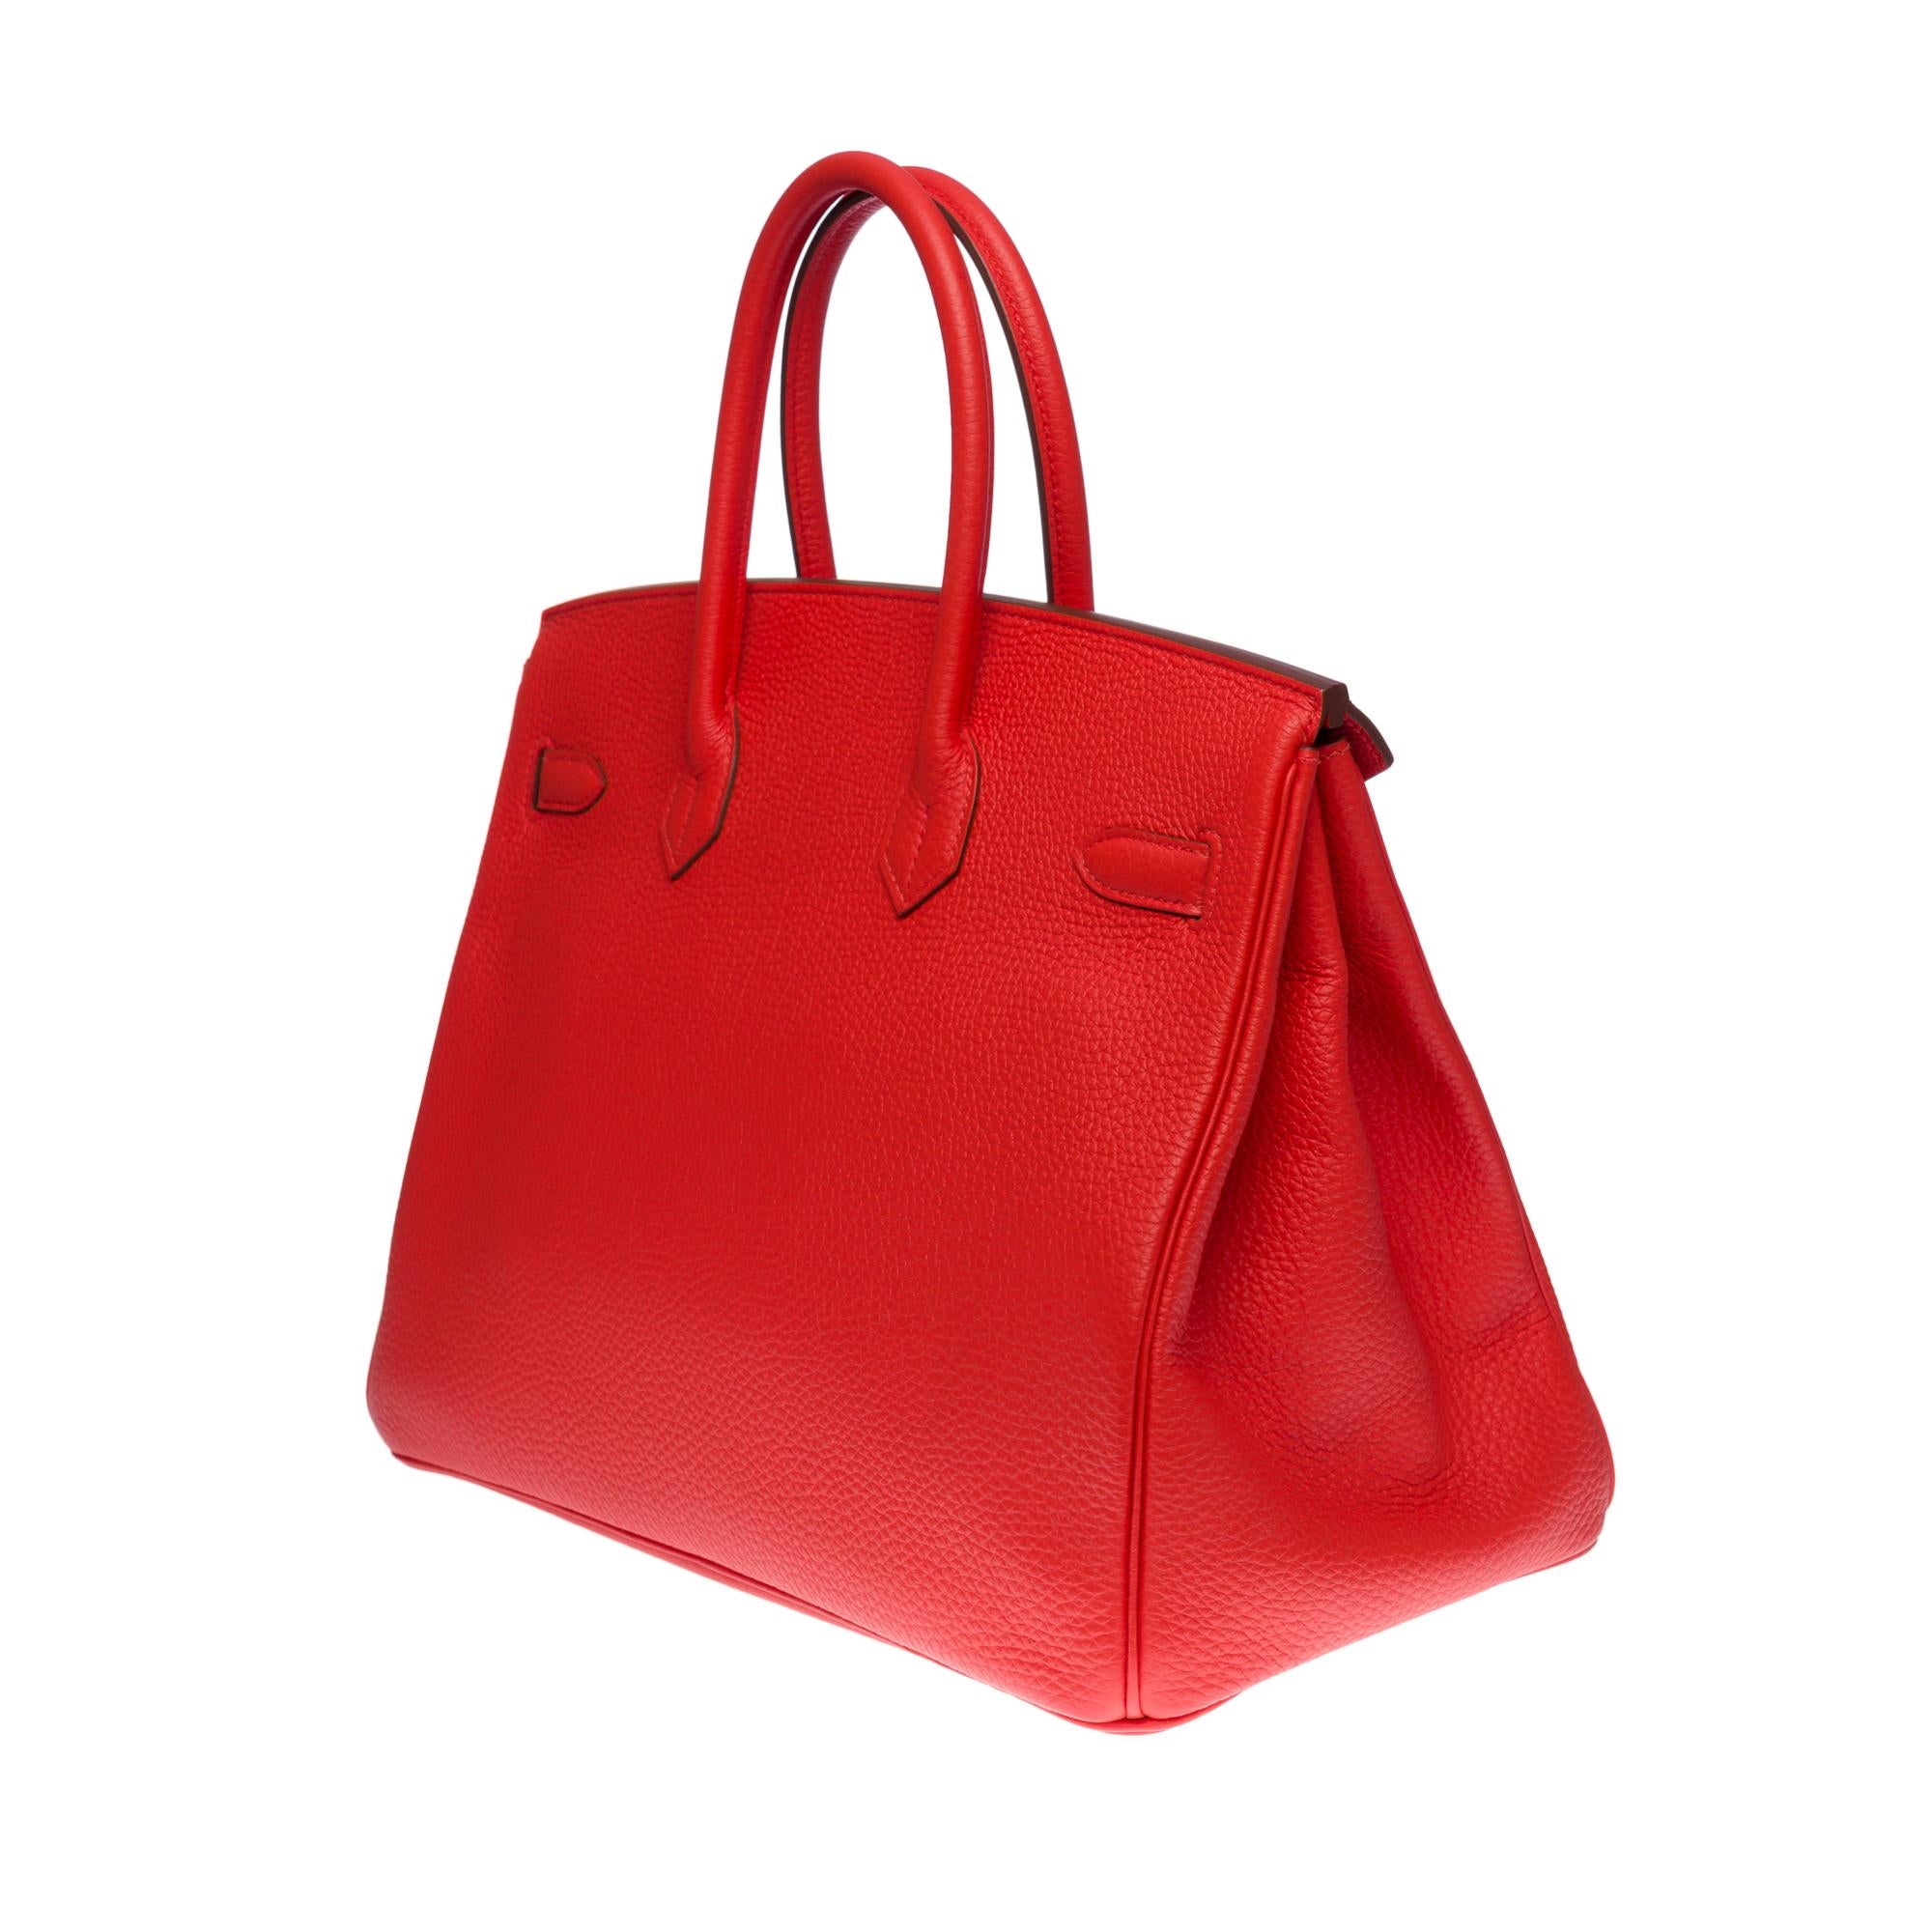 Women's or Men's Almost New Hermès Birkin 35 handbag in Orange Poppy Togo leather, SHW For Sale